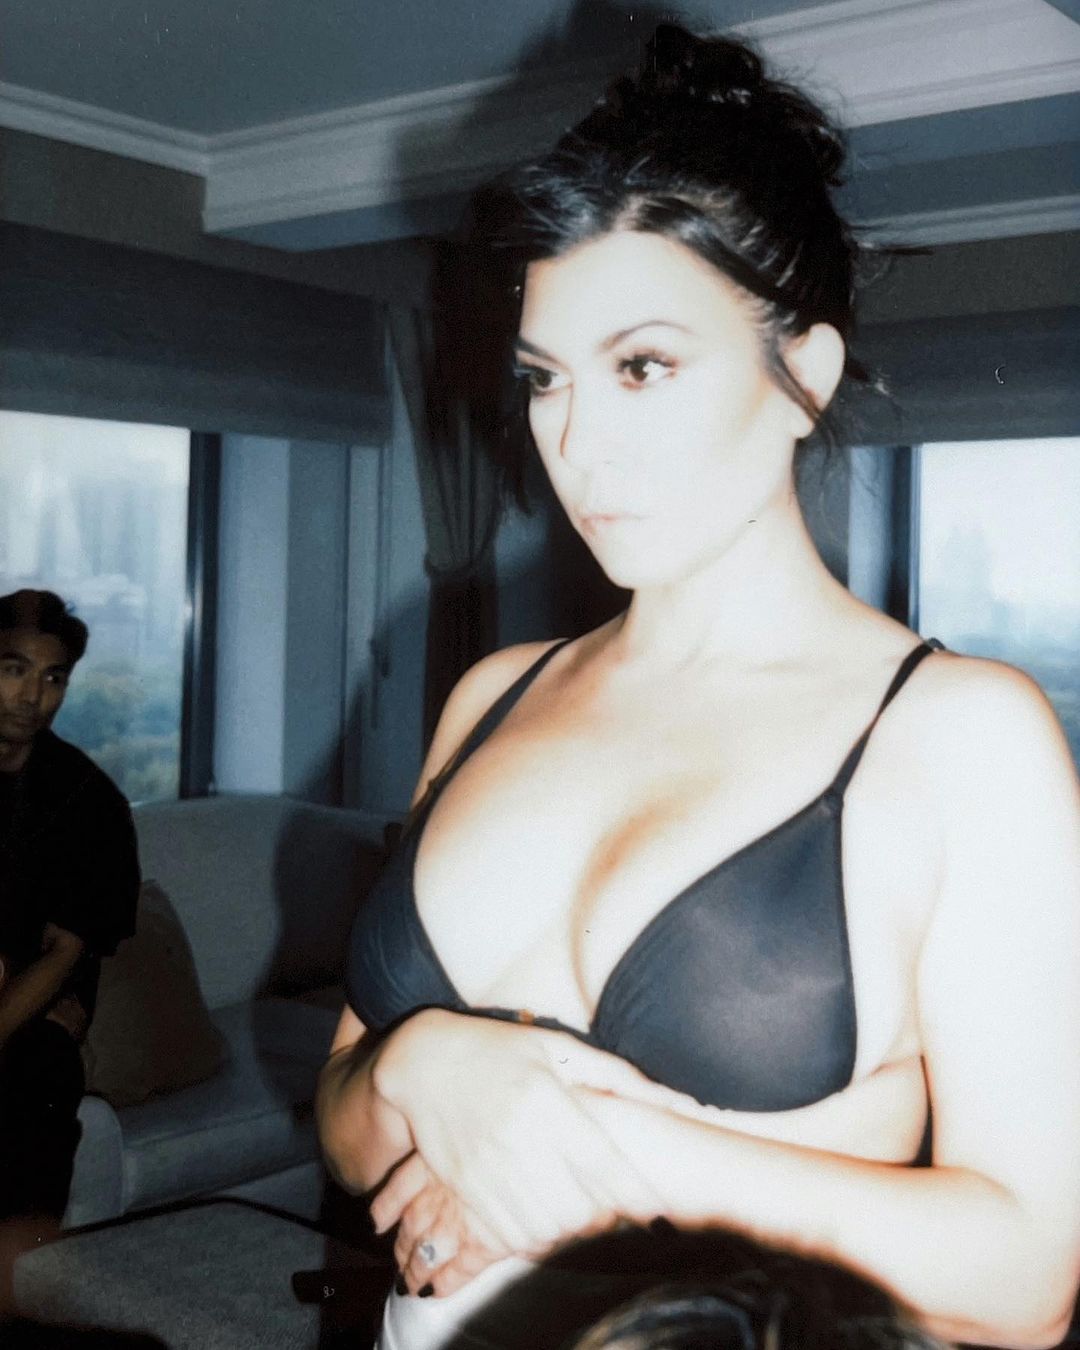 FOTOS Llvate a Kourtney Kardashian al bao contigo! - Photo 23